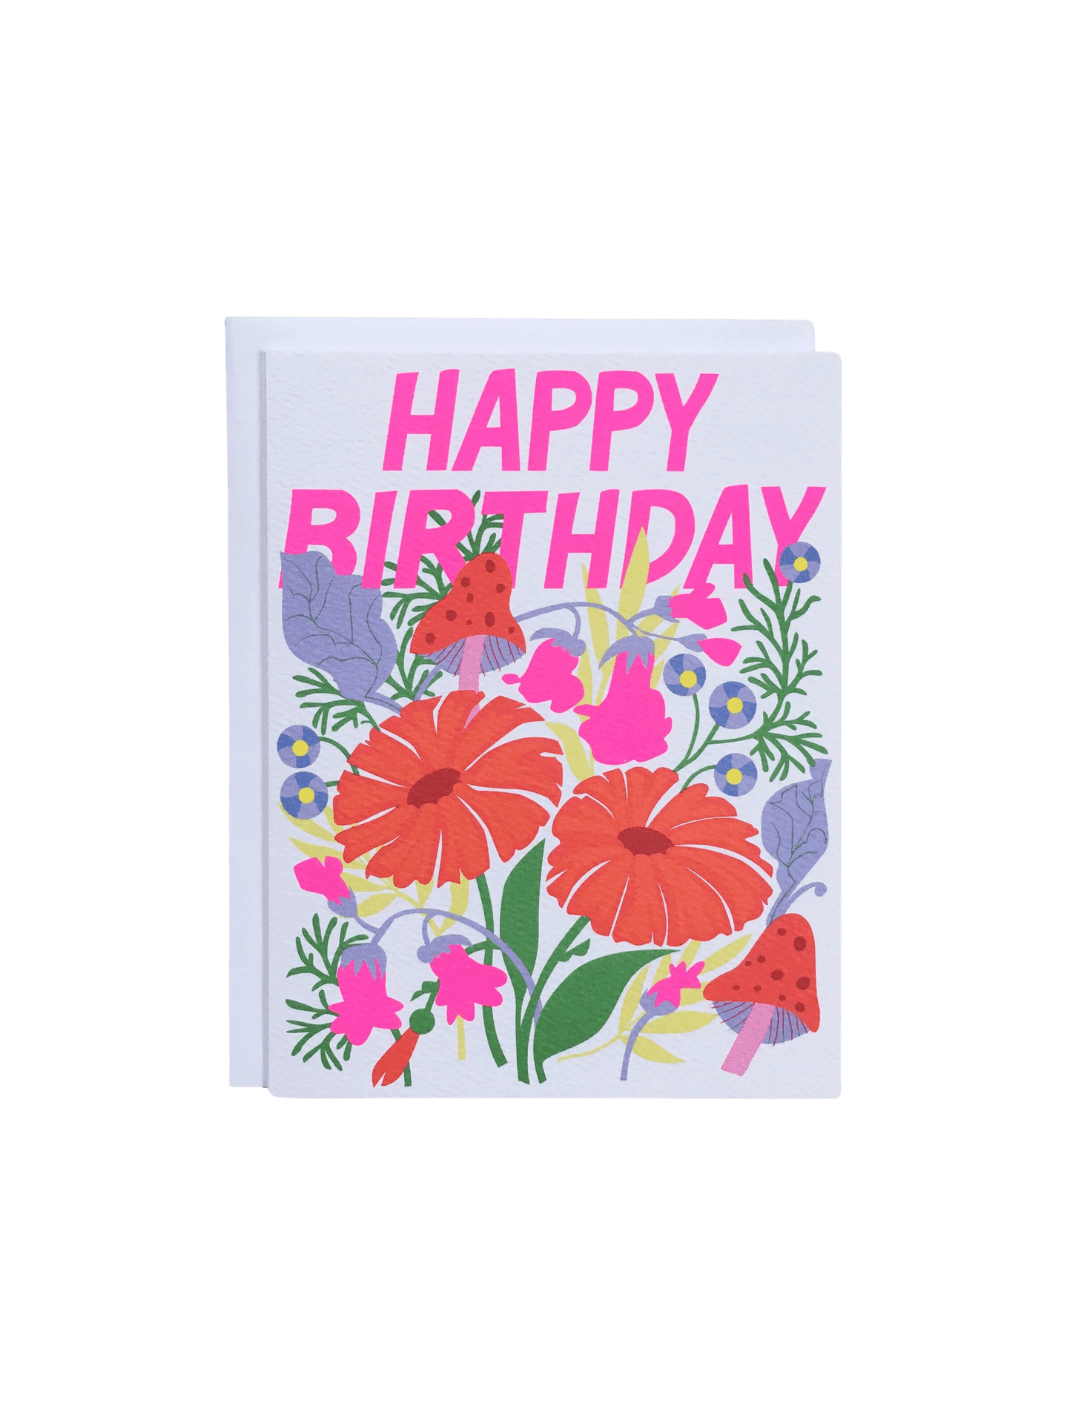 Twentyseven Toronto - Banquet Workshop Happy Birthday Note Card With Mushrooms And Florals